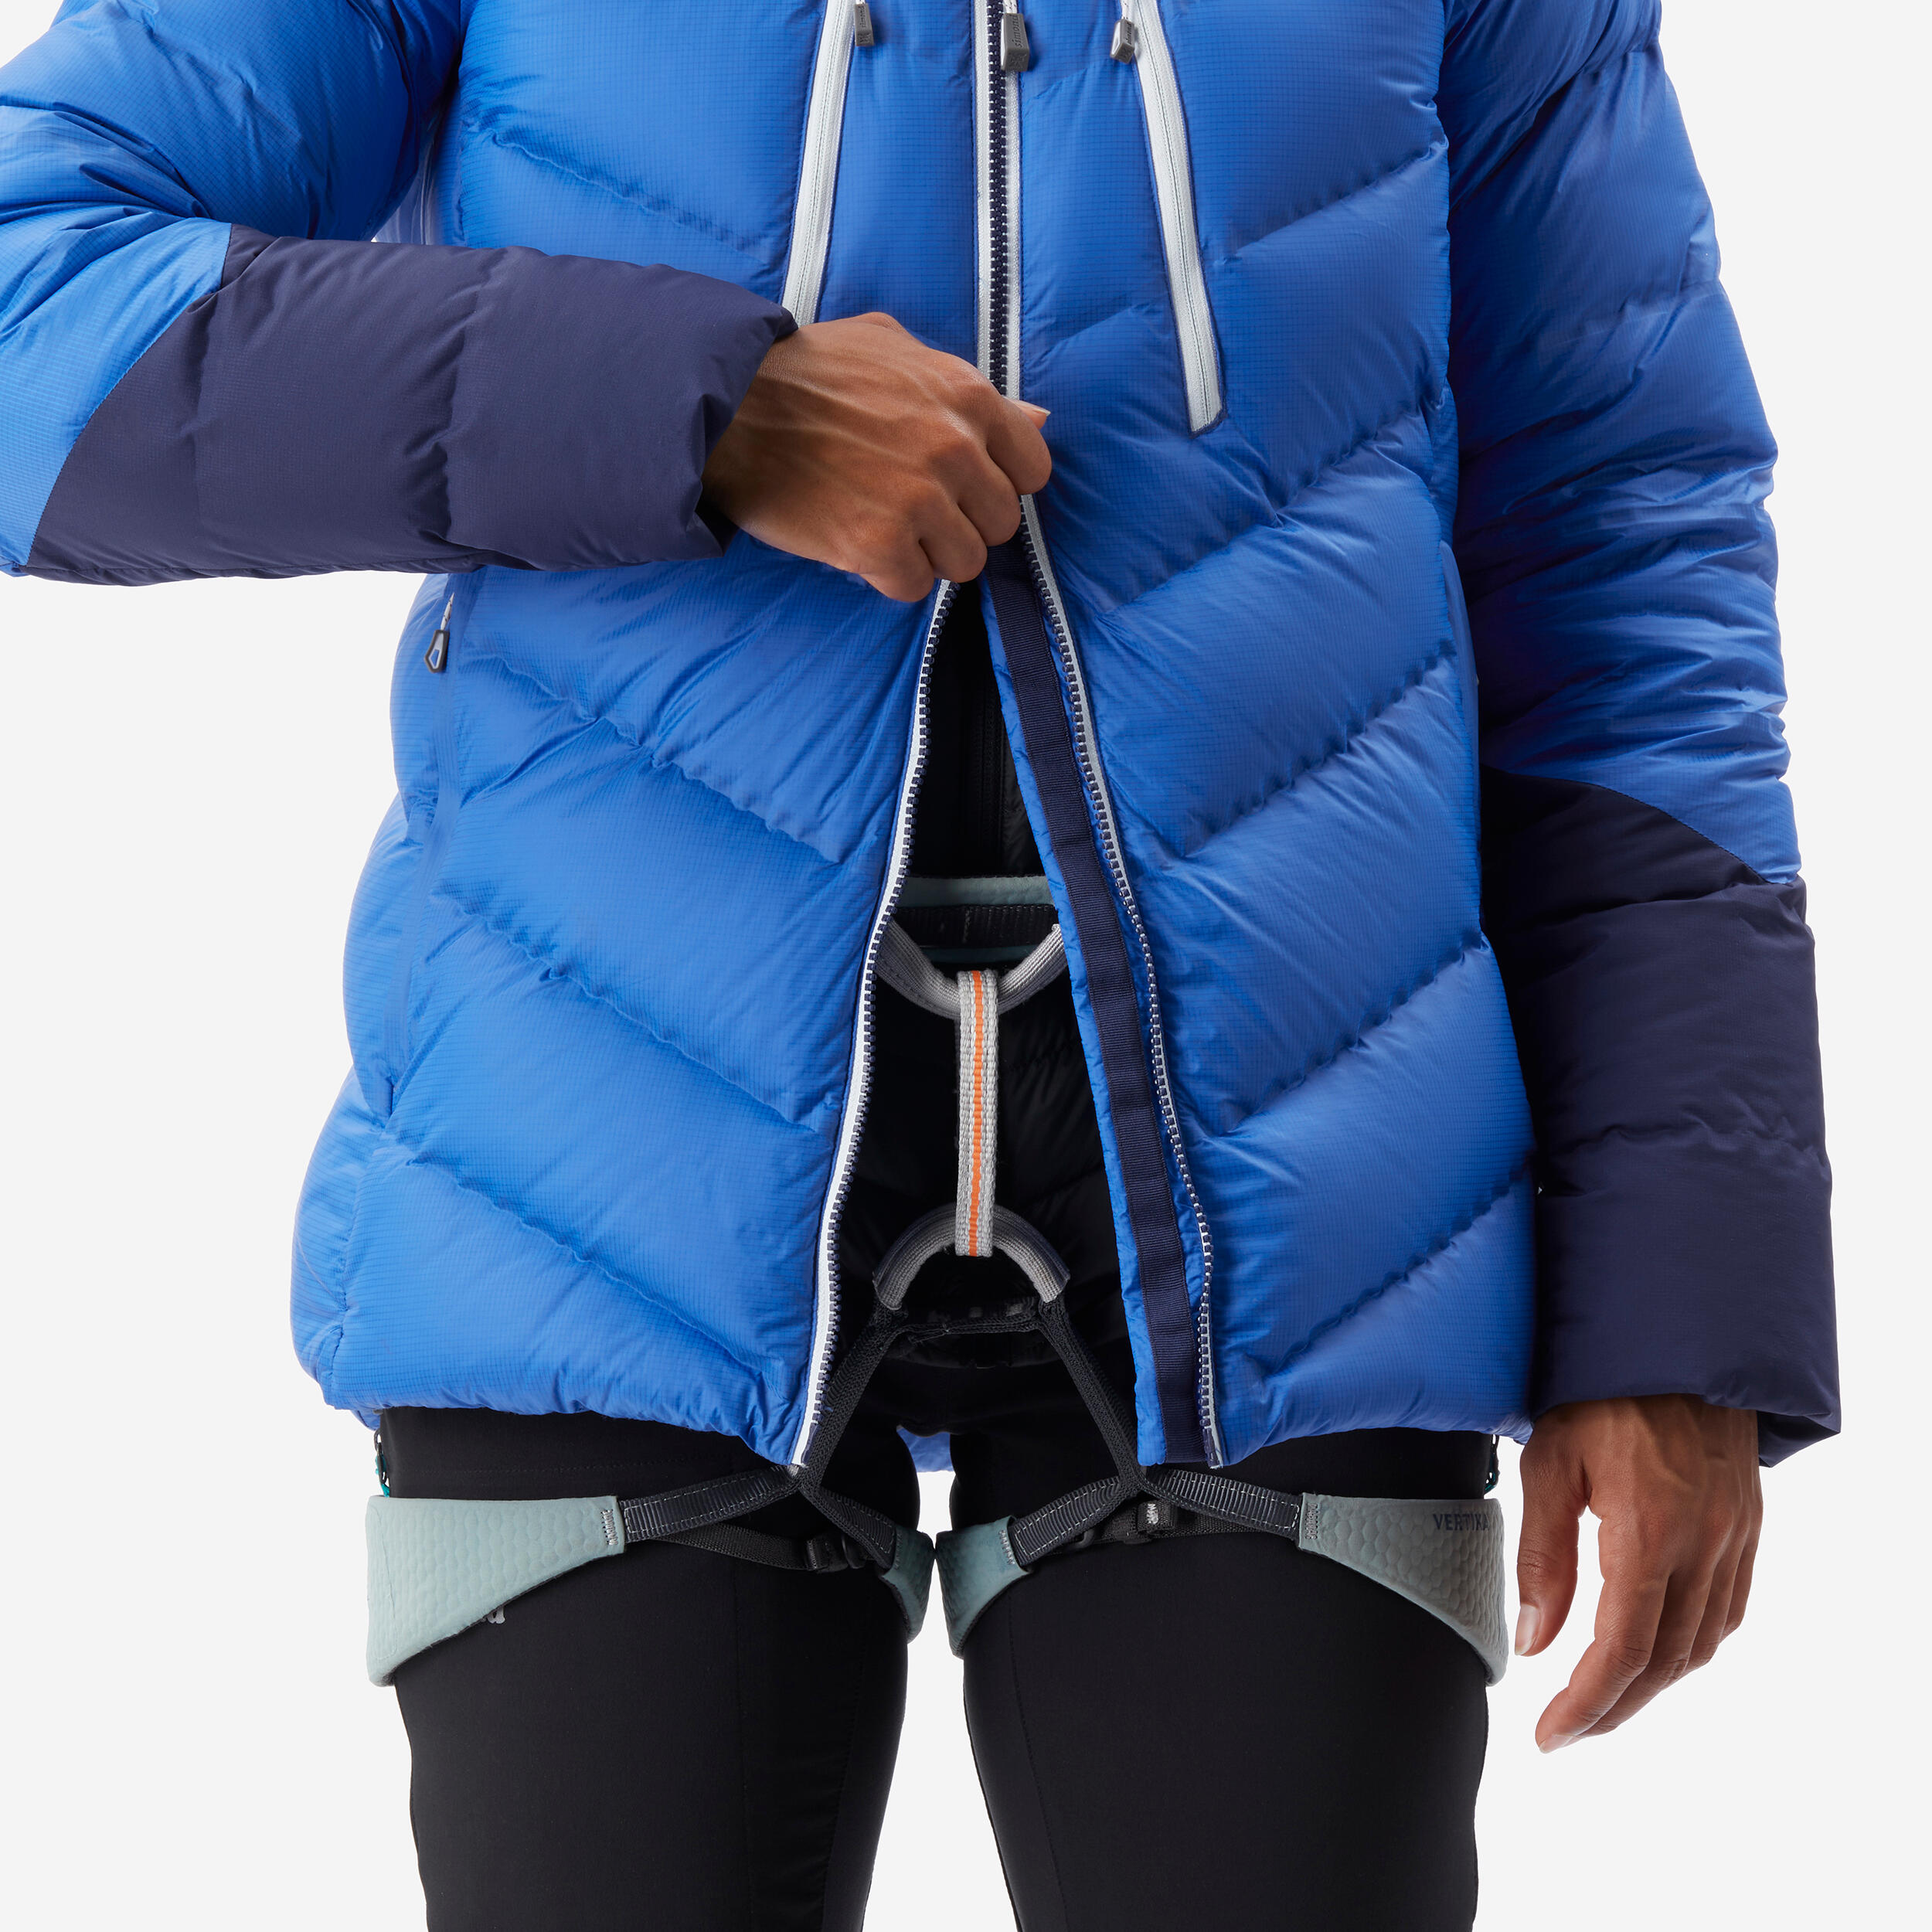 Manteau d’alpinisme en duvet femme – Makalu bleu - SIMOND